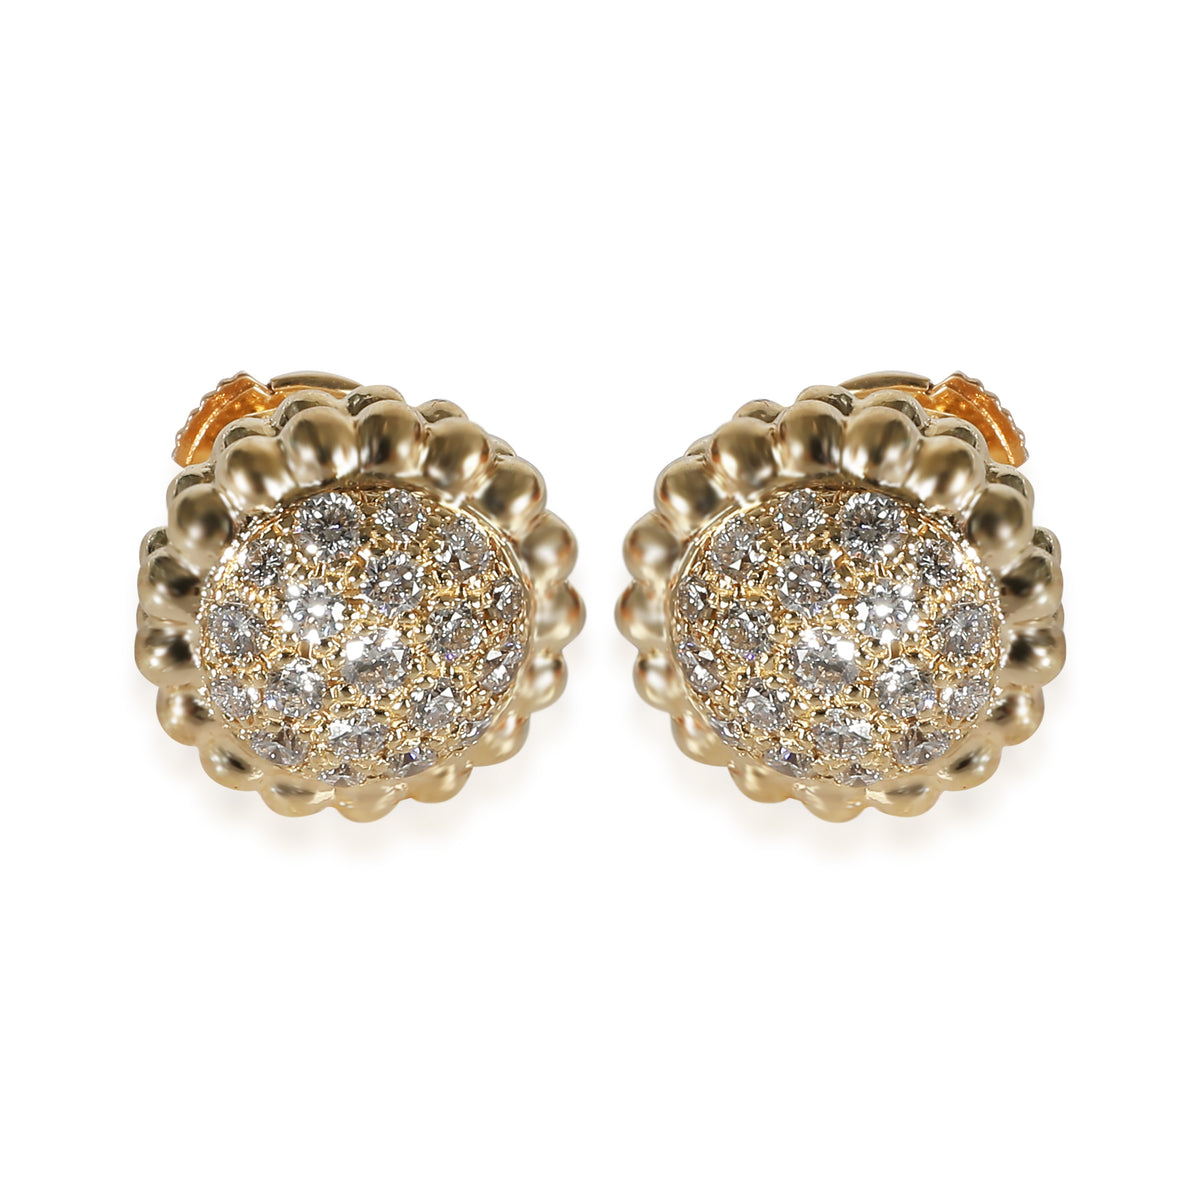 Perlee Earrings in 18k Yellow Gold 0.69 CTW